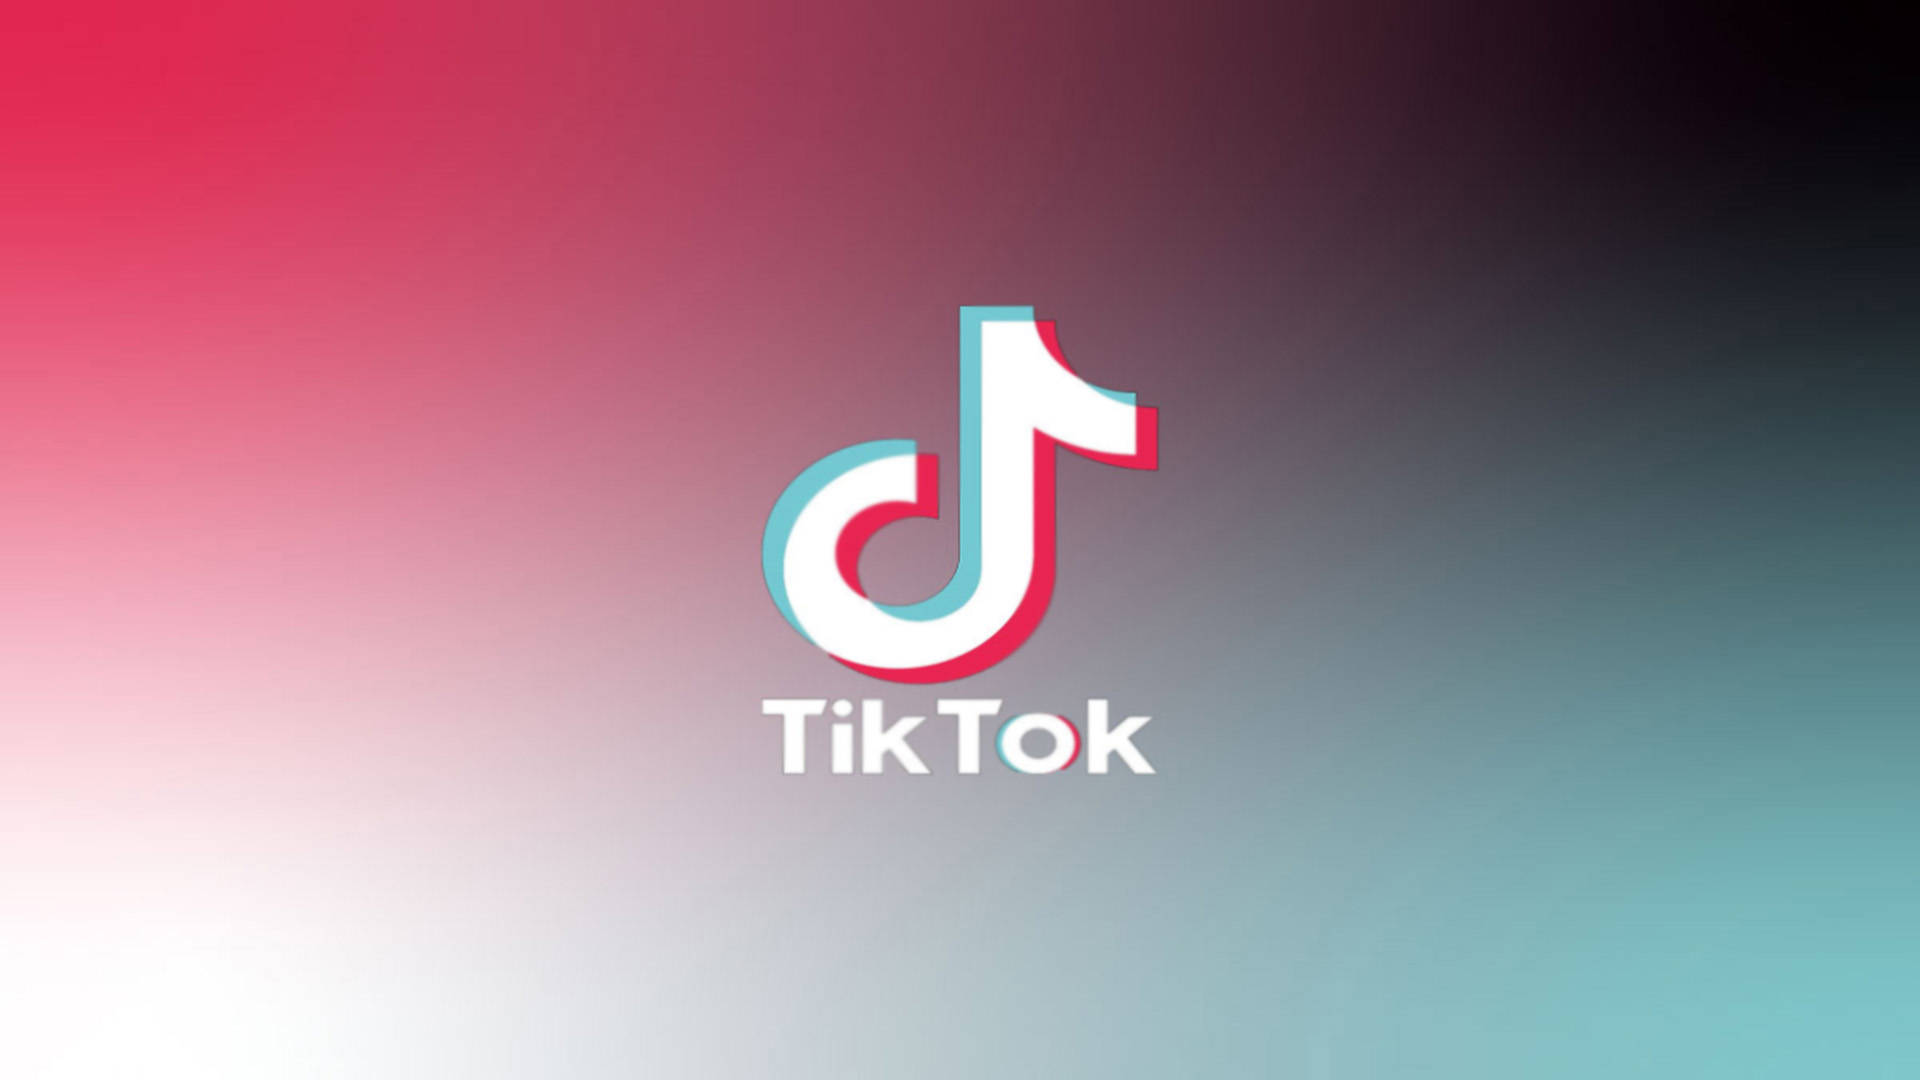 TikTok Logo Red Teal Gradient Wallpaper